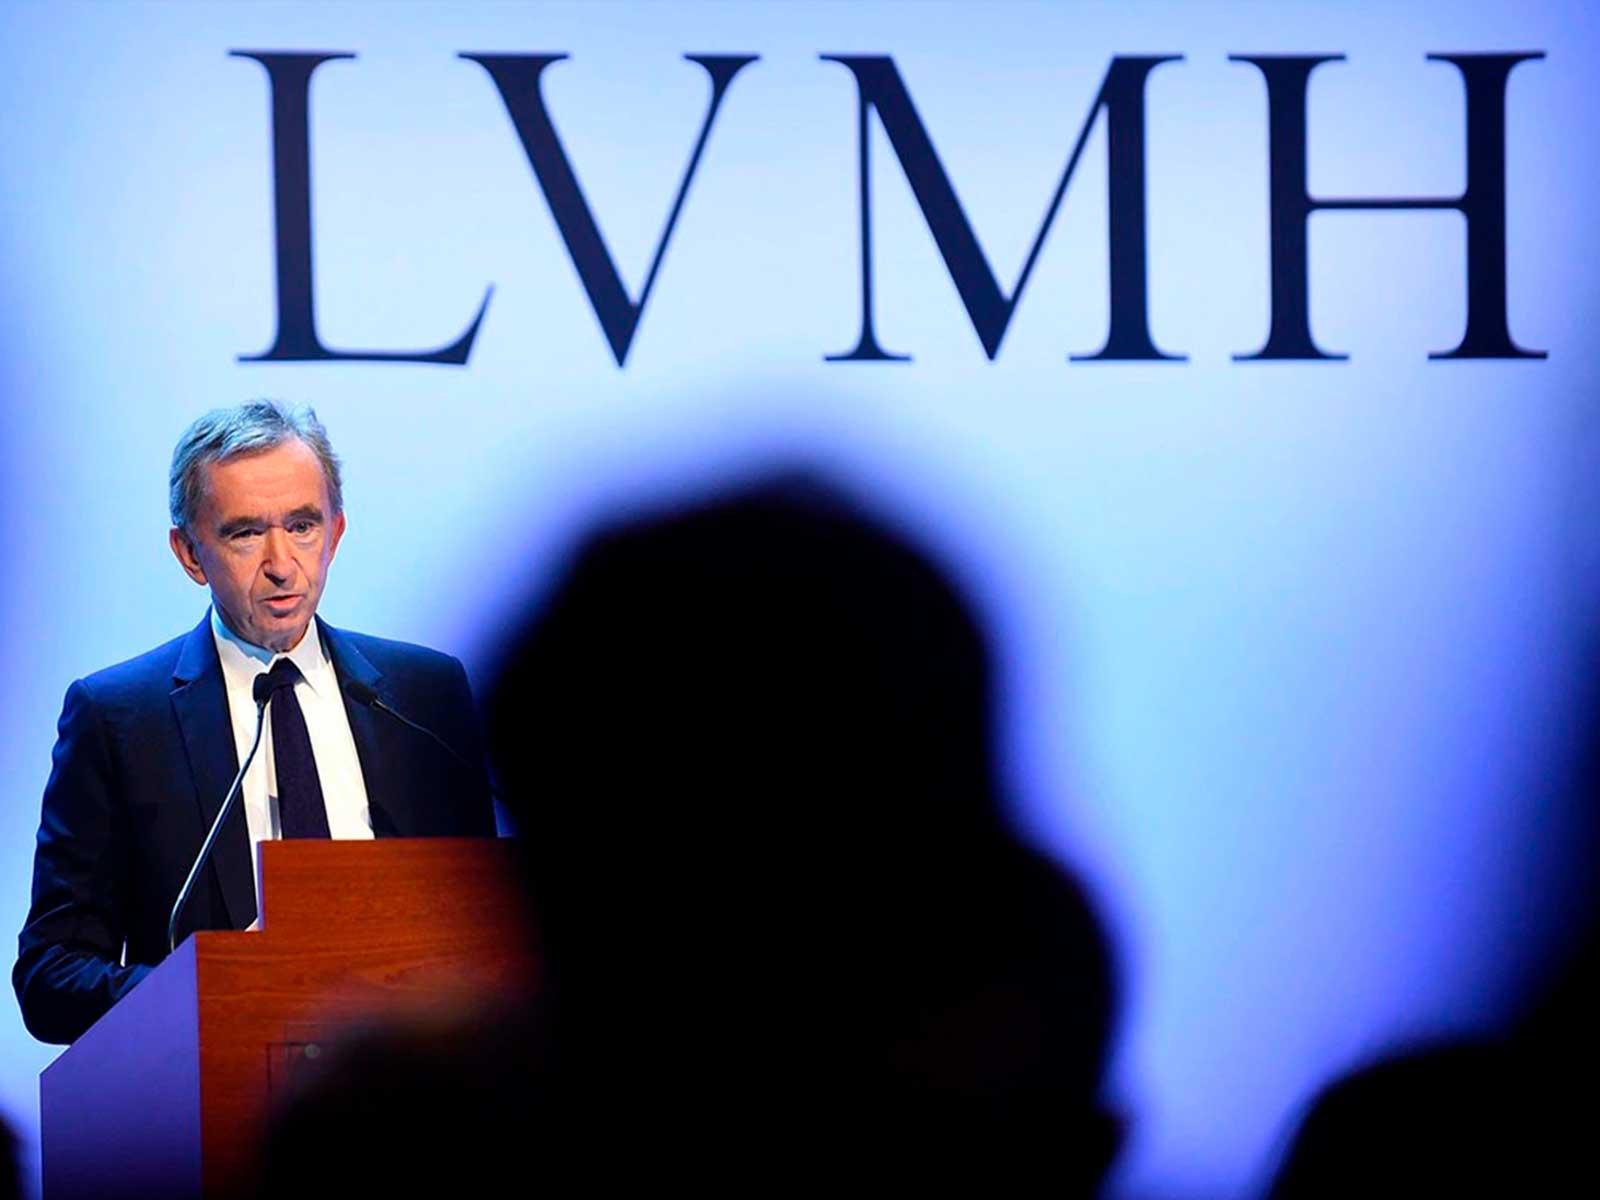 LVMH considers acquiring Richemont